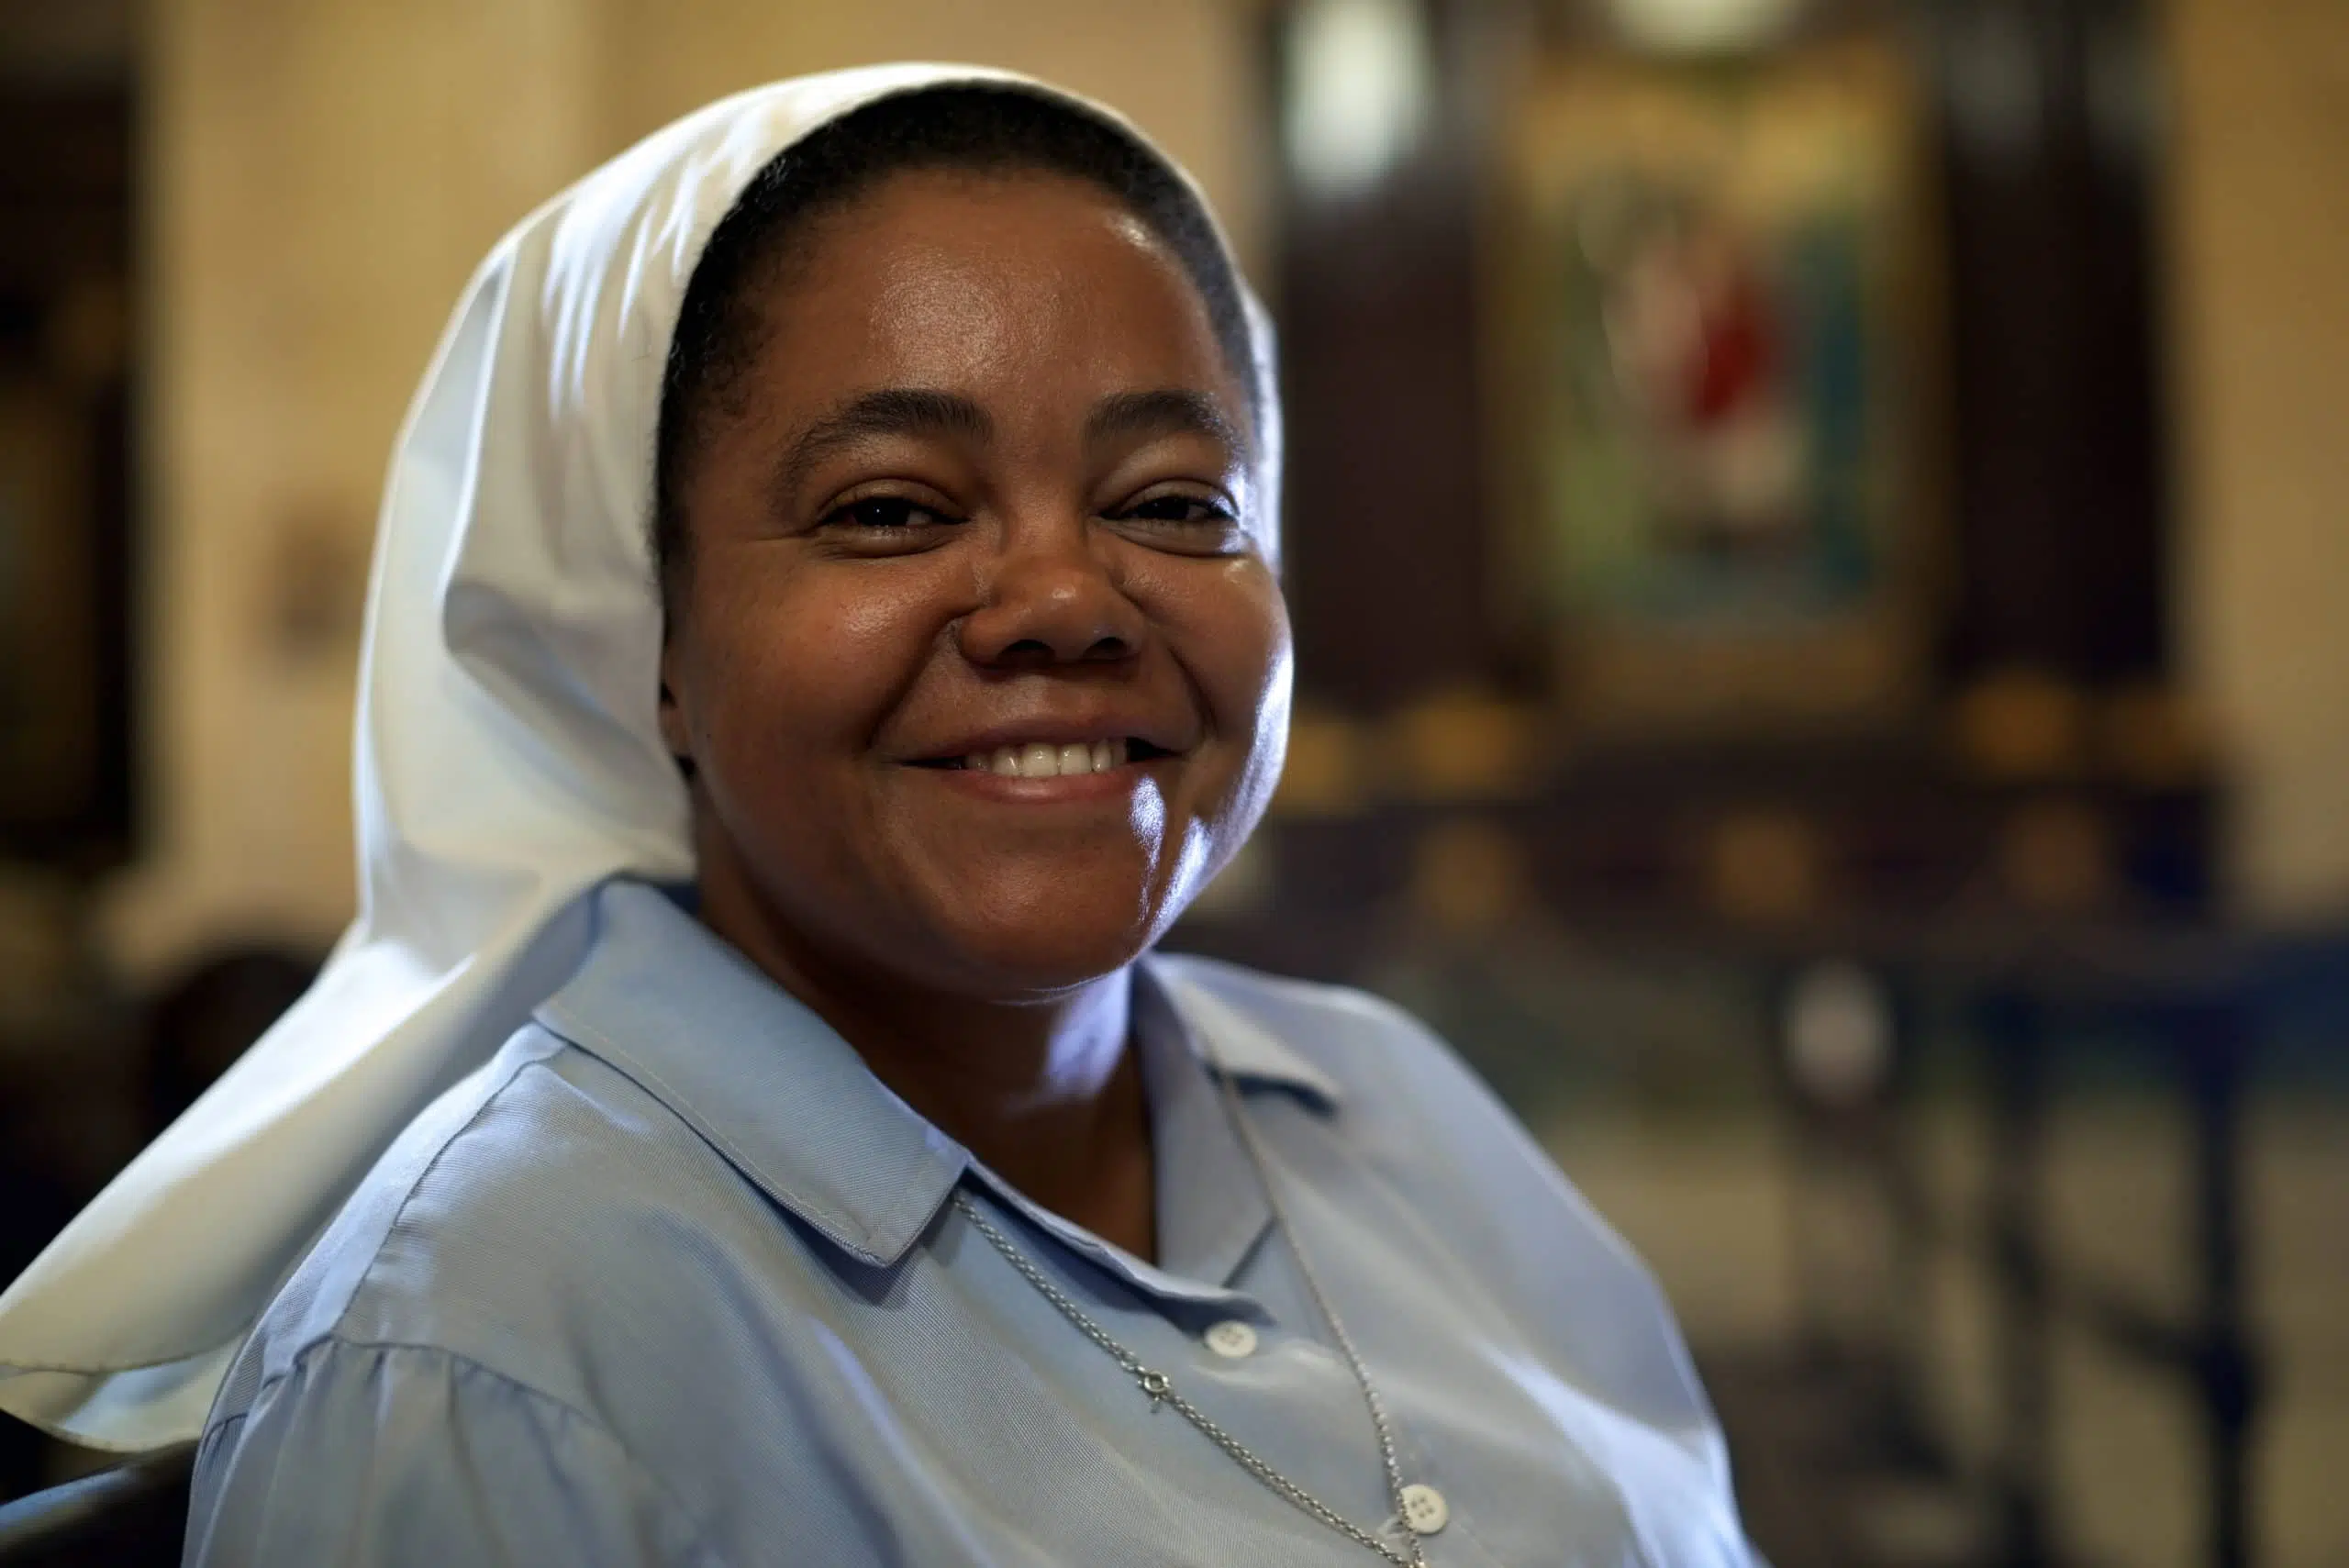 Religious sister, portrait of catholic nun in church